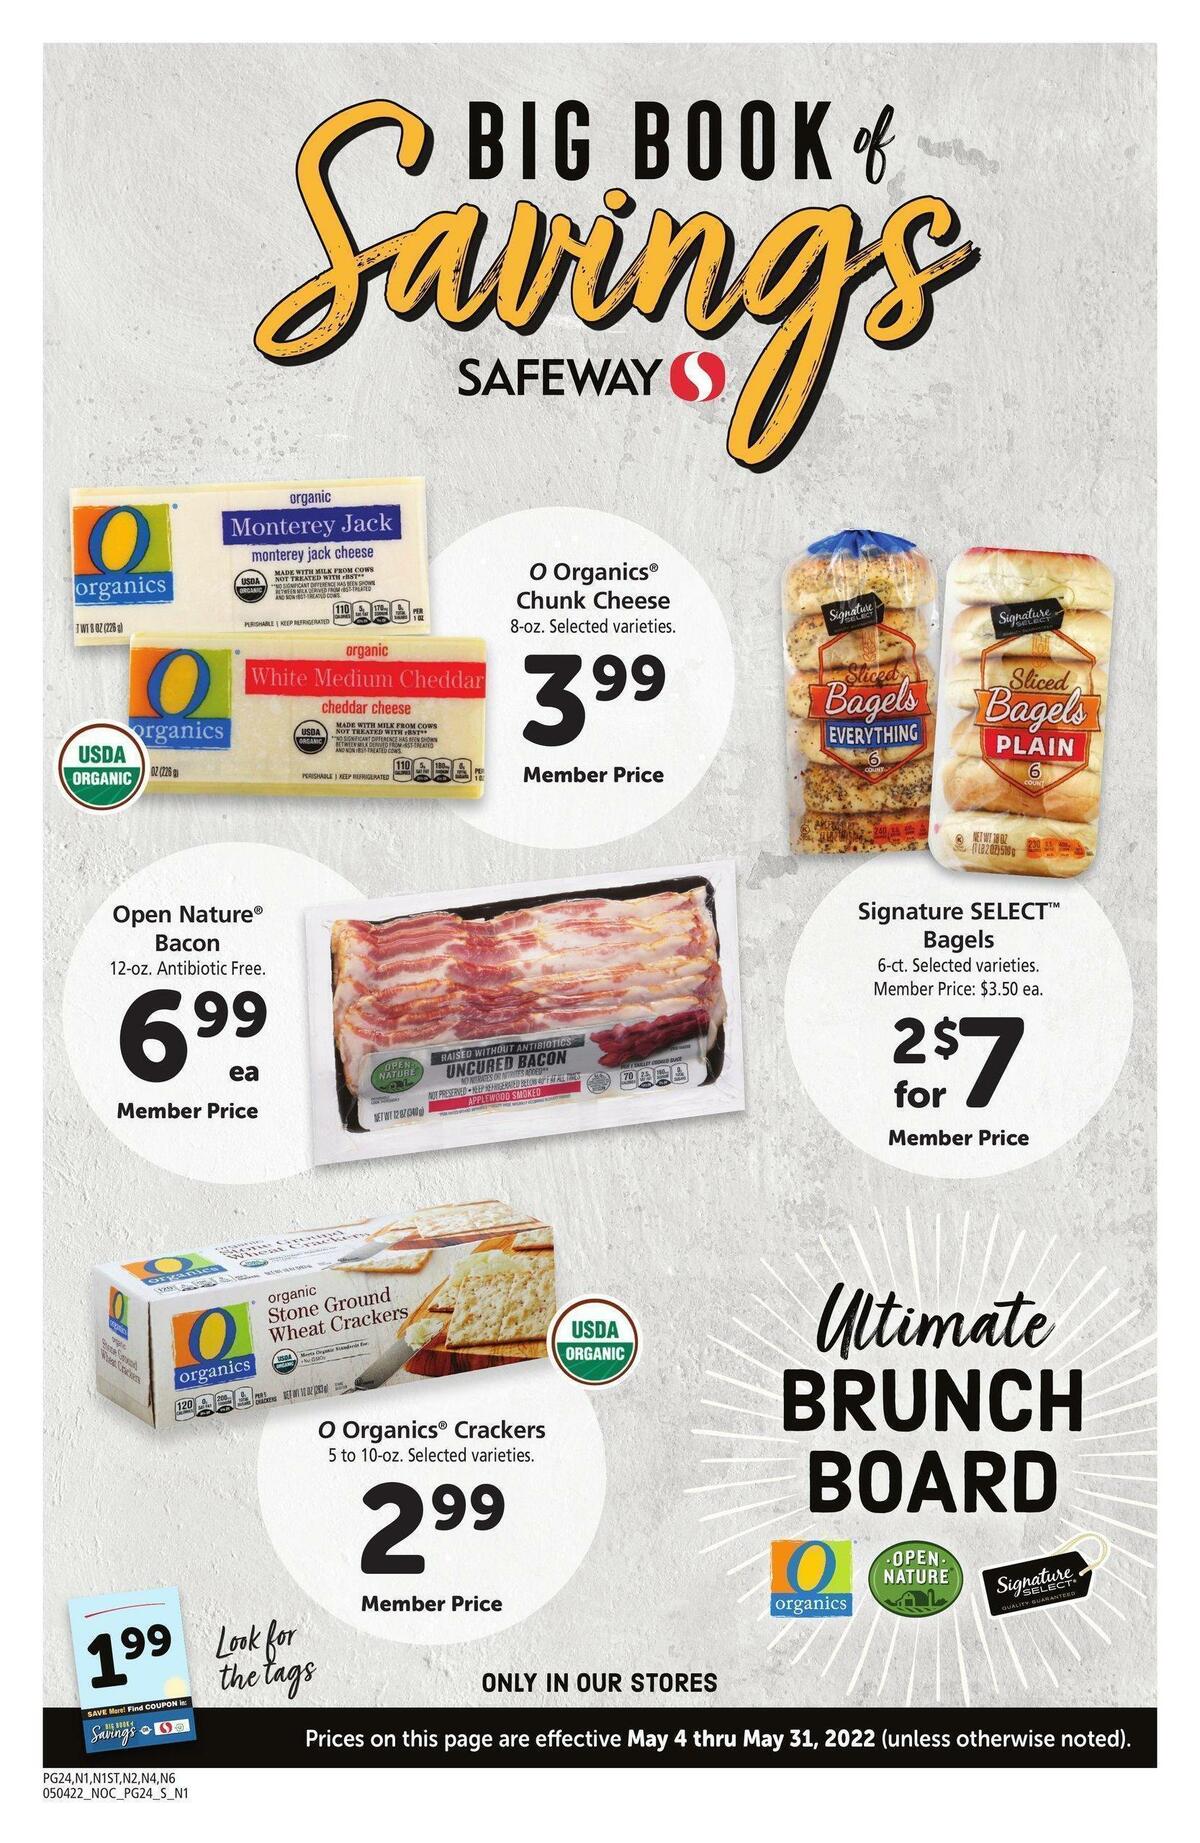 Safeway Big Book of Savings Weekly Ad from May 4